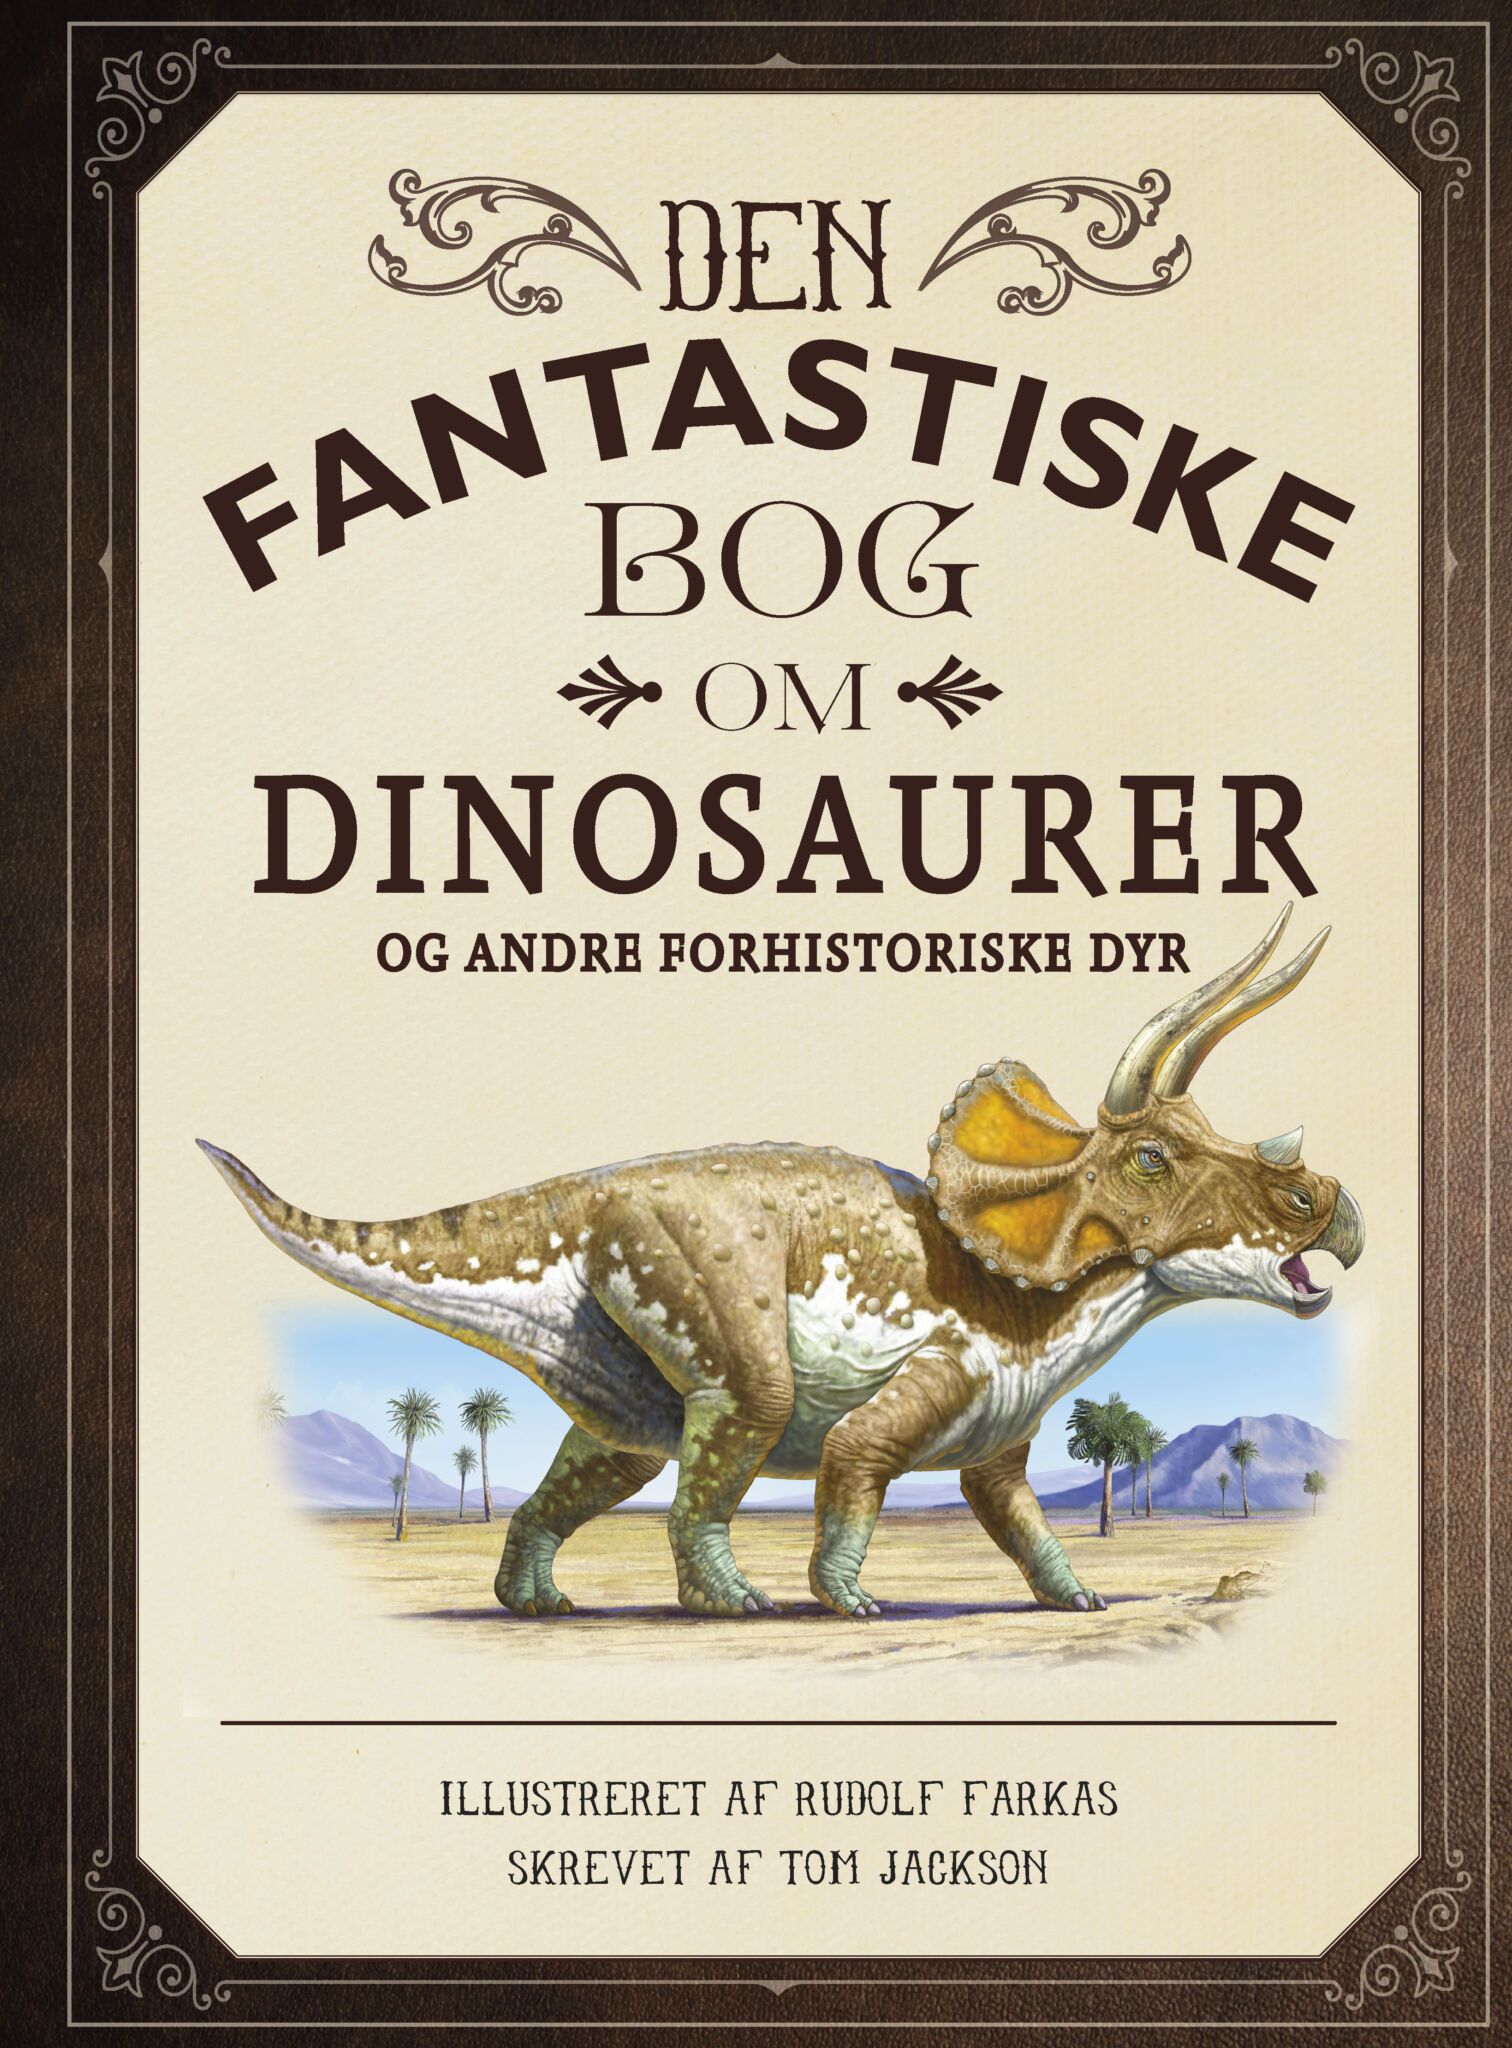 Se Den Fantastiske Bog Om Dinosaurer hos Legekammeraten.dk